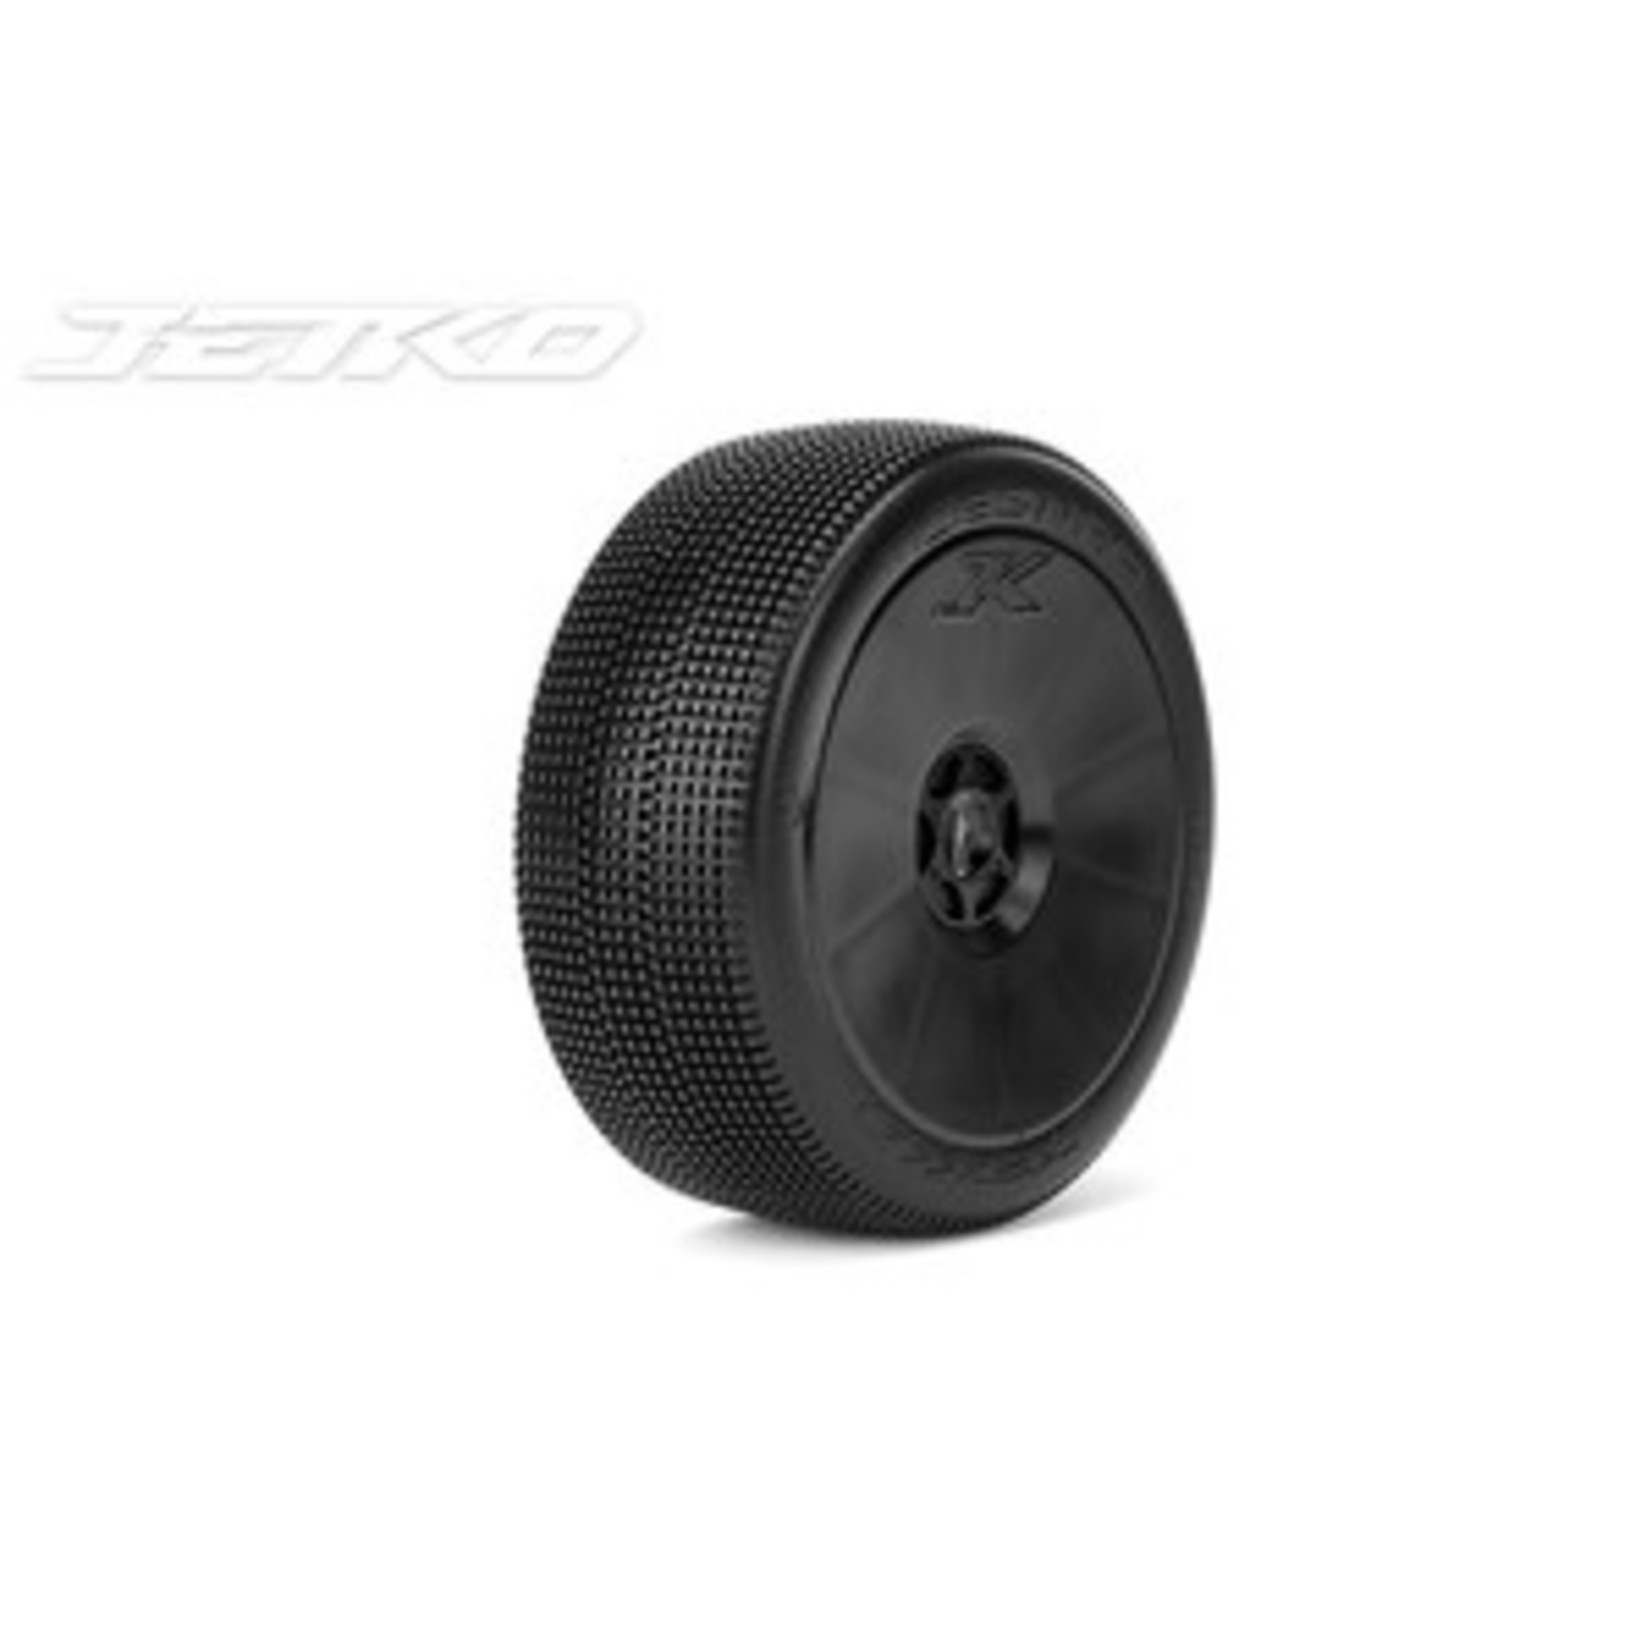 Jetko Tires JKO1004DBSSG Lesnar 1/8 Buggy Tires Mounted on Black Dish Rims, Super Soft (2)